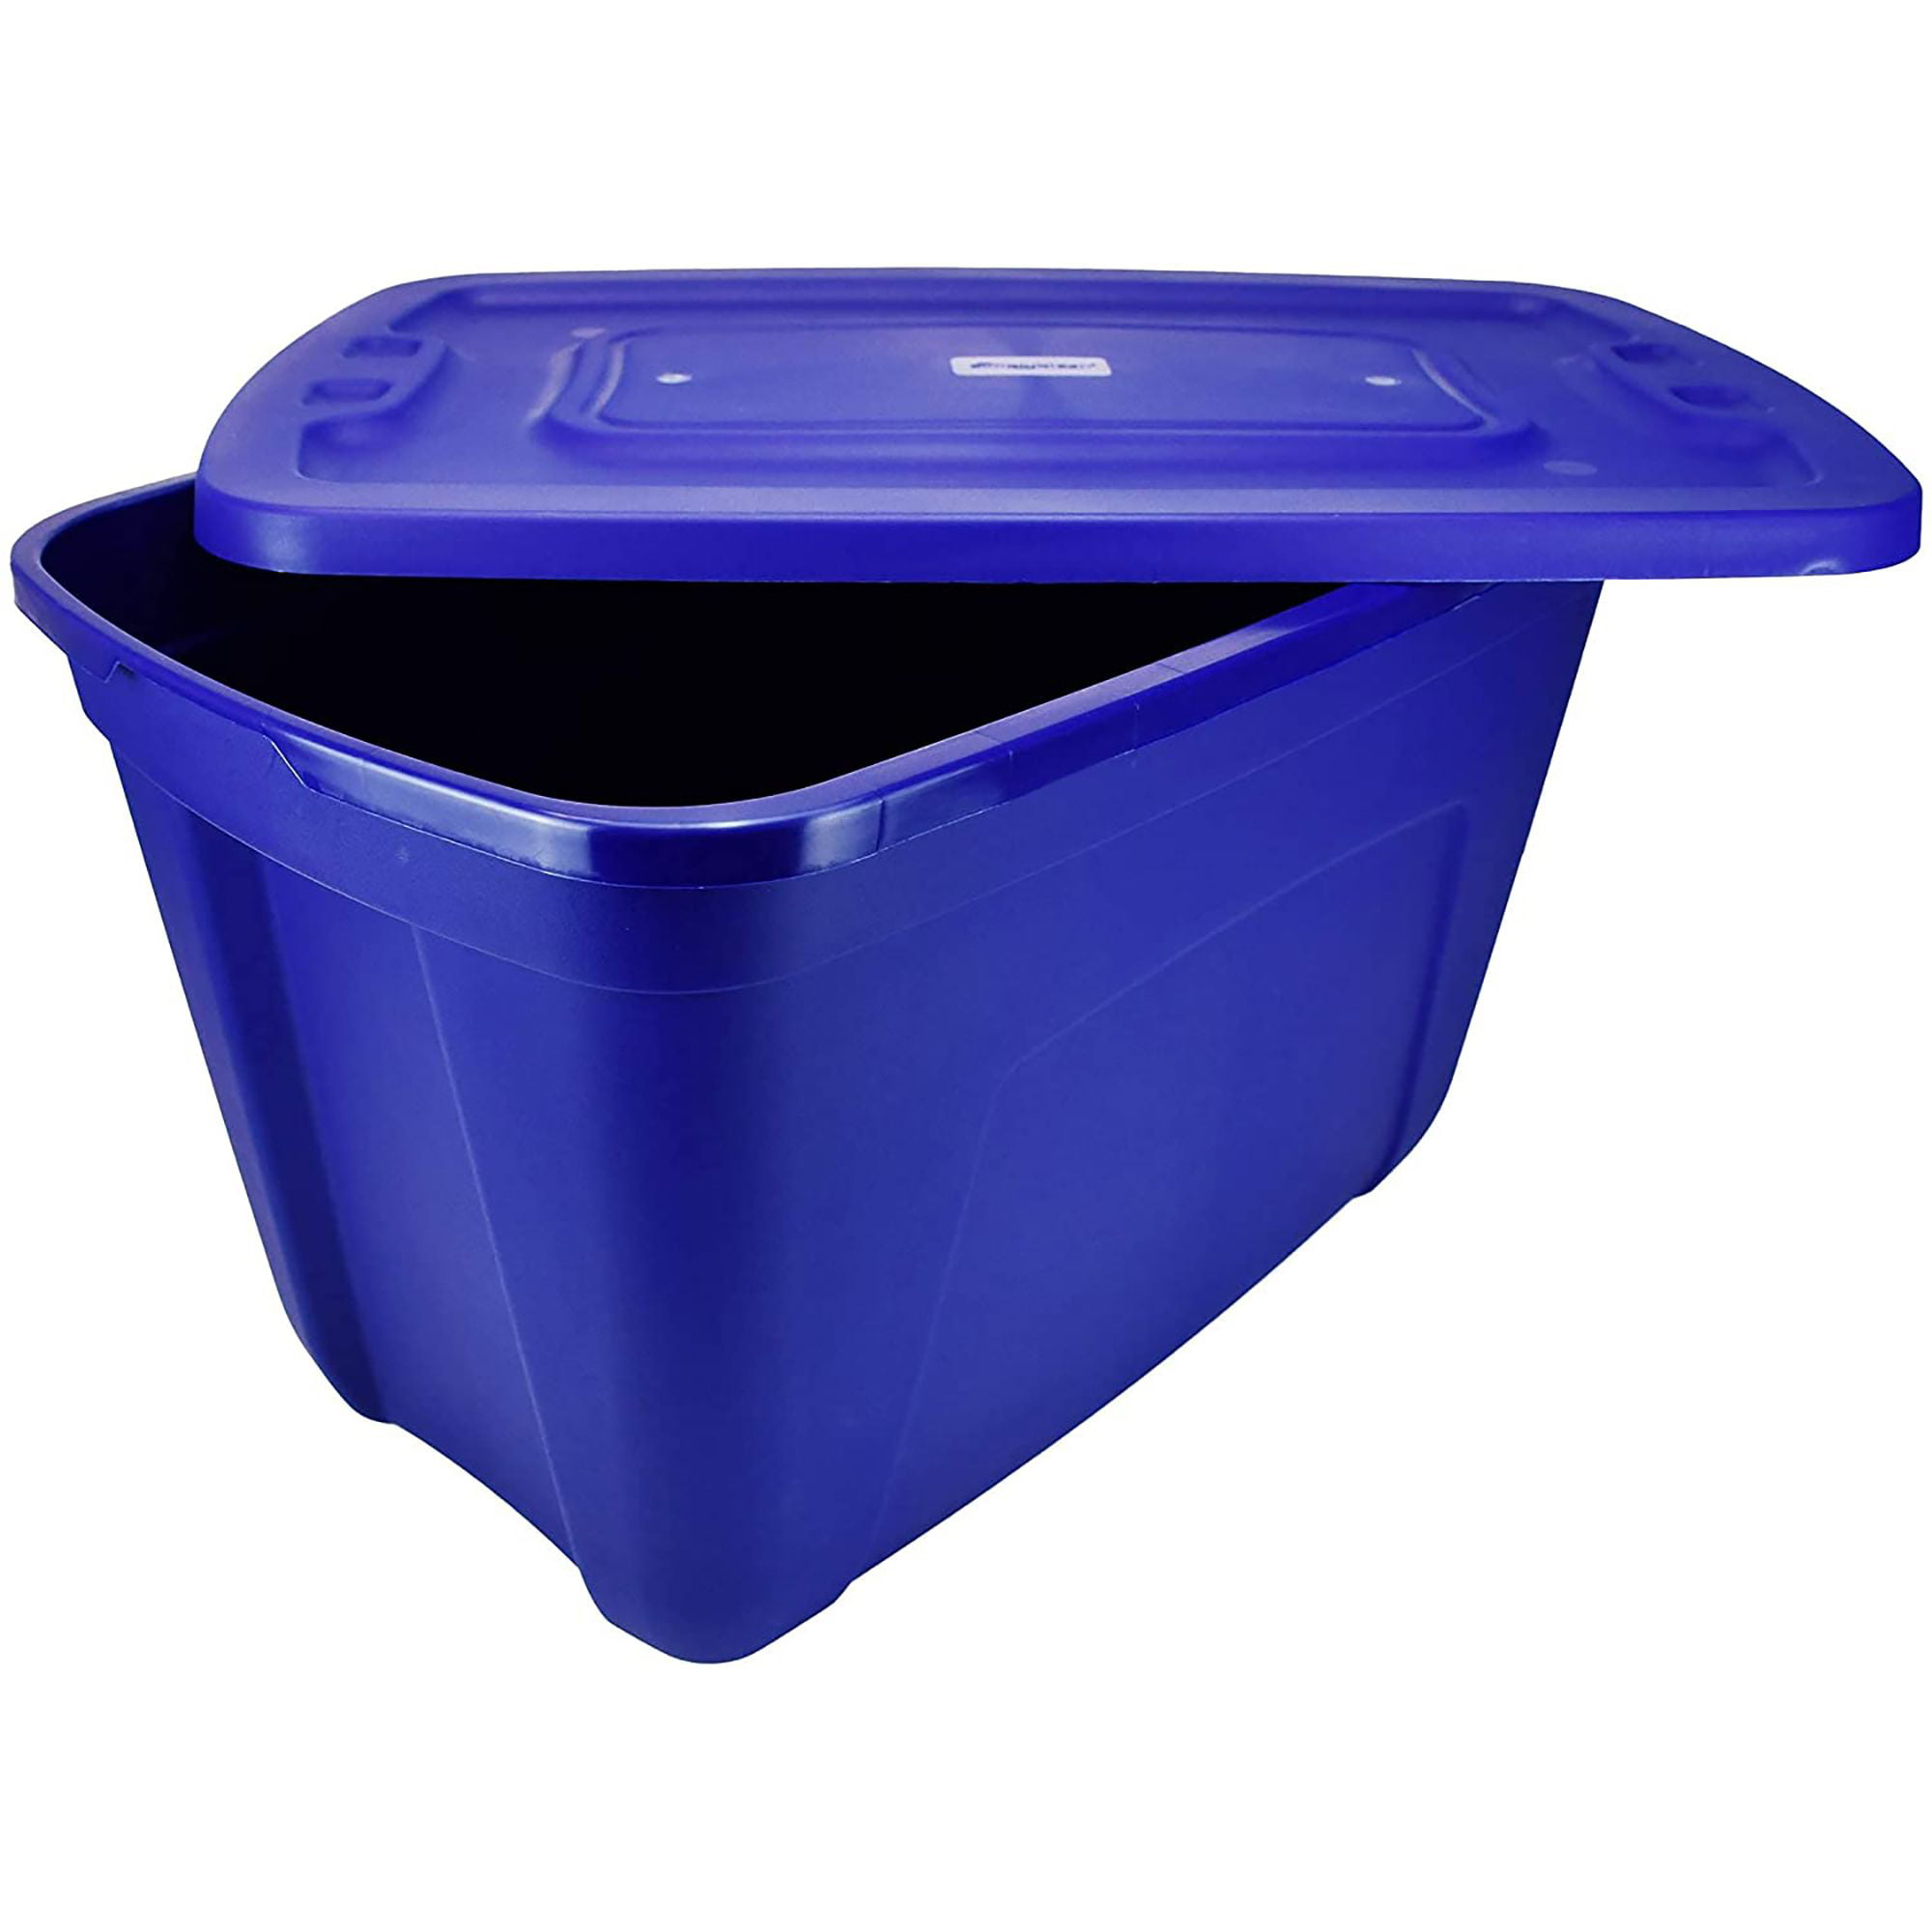 Tot Tutors Plastic 4.25 Gal. Small Storage Bins in Blue and Teal